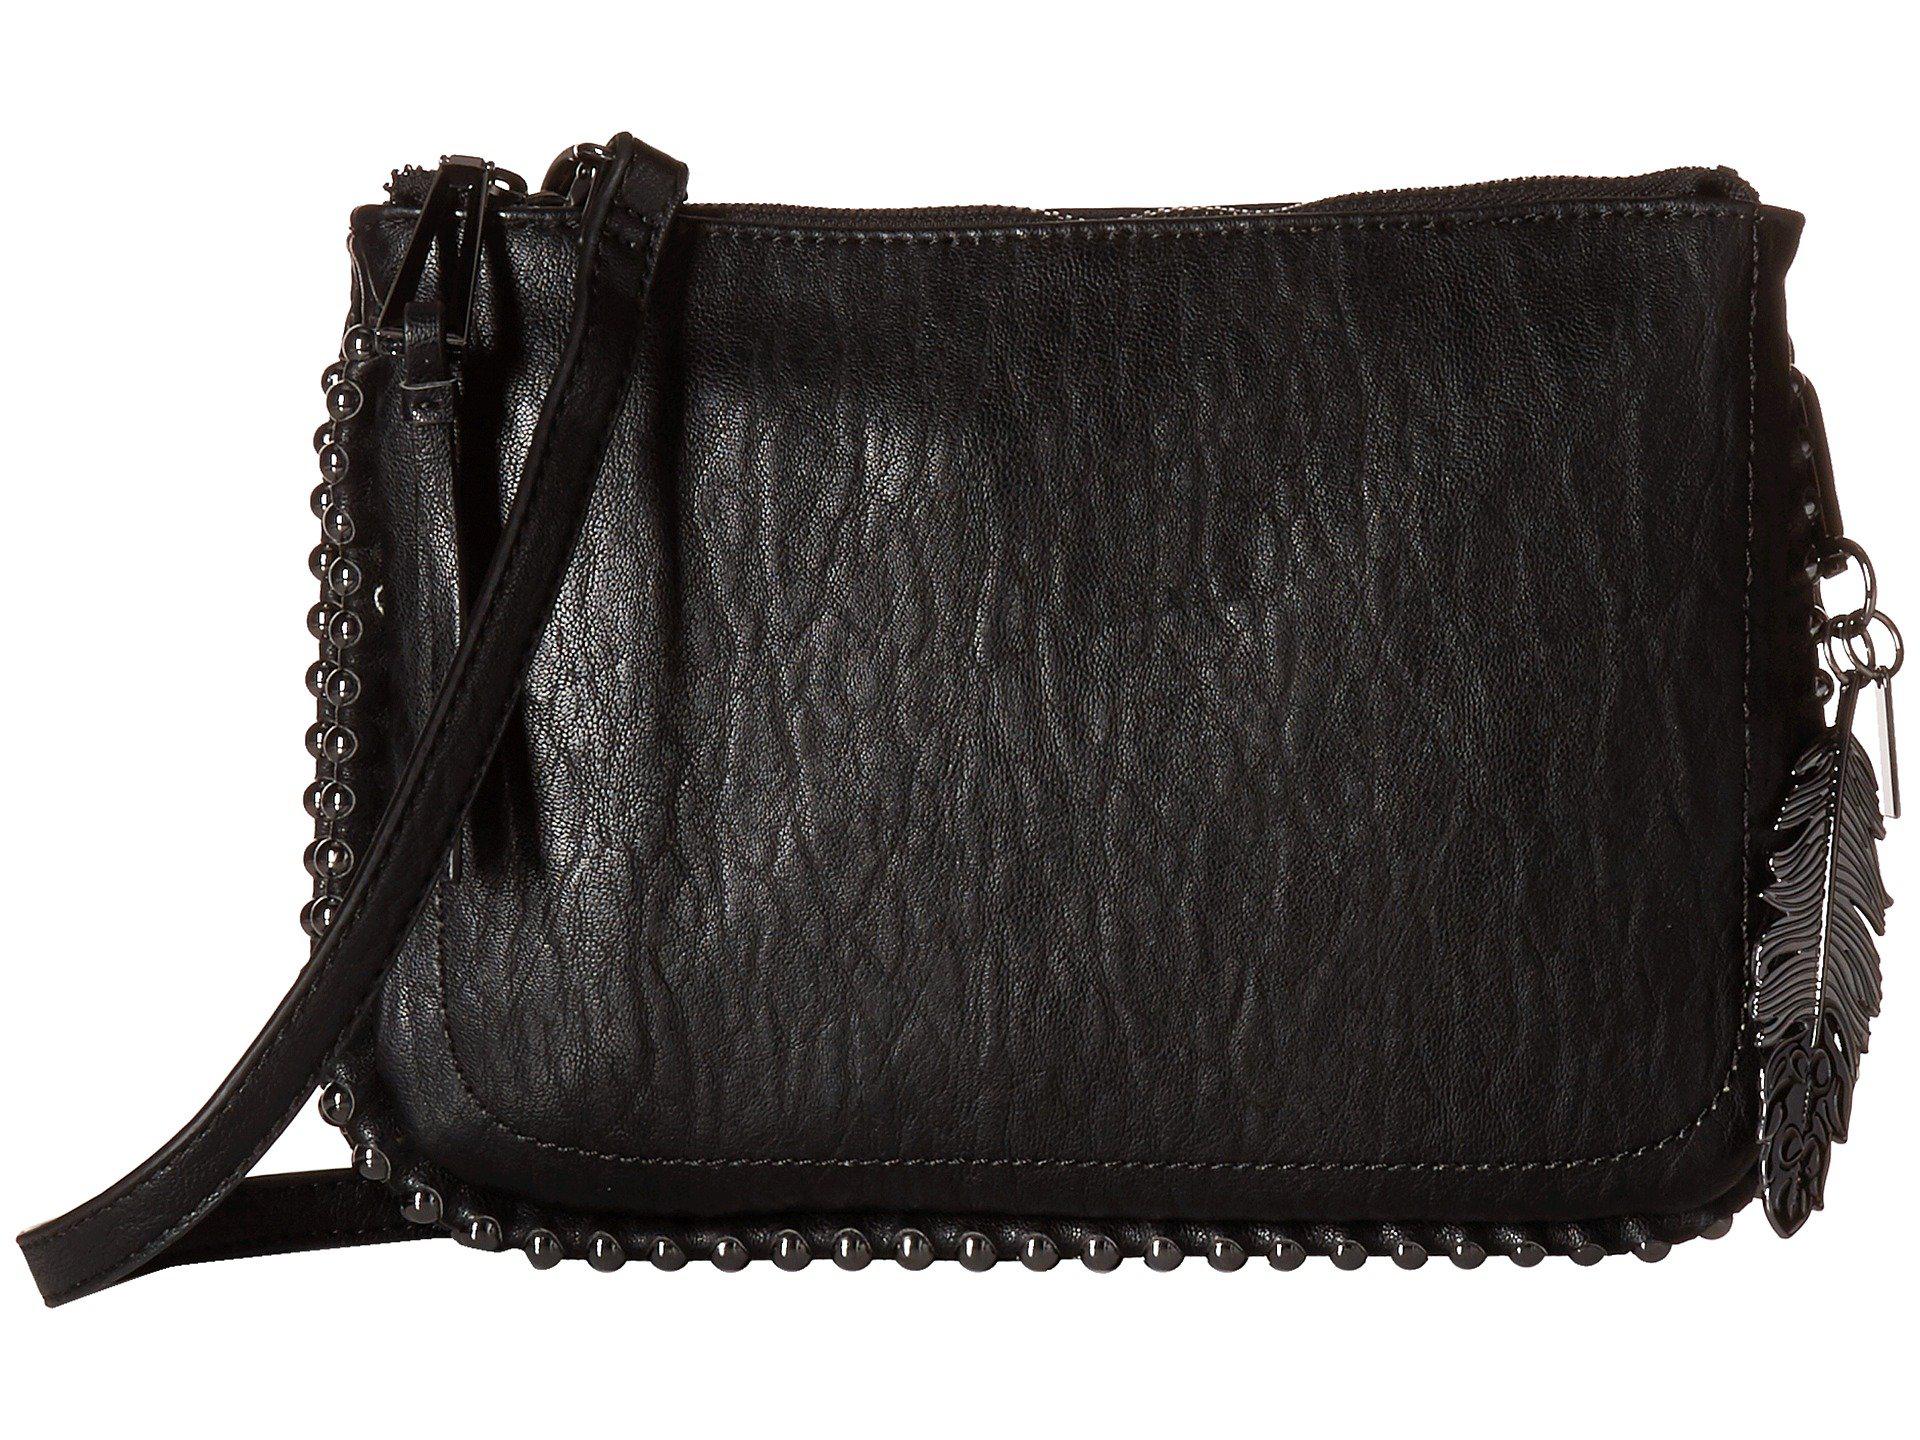 jessica simpson handbag - Women's handbags